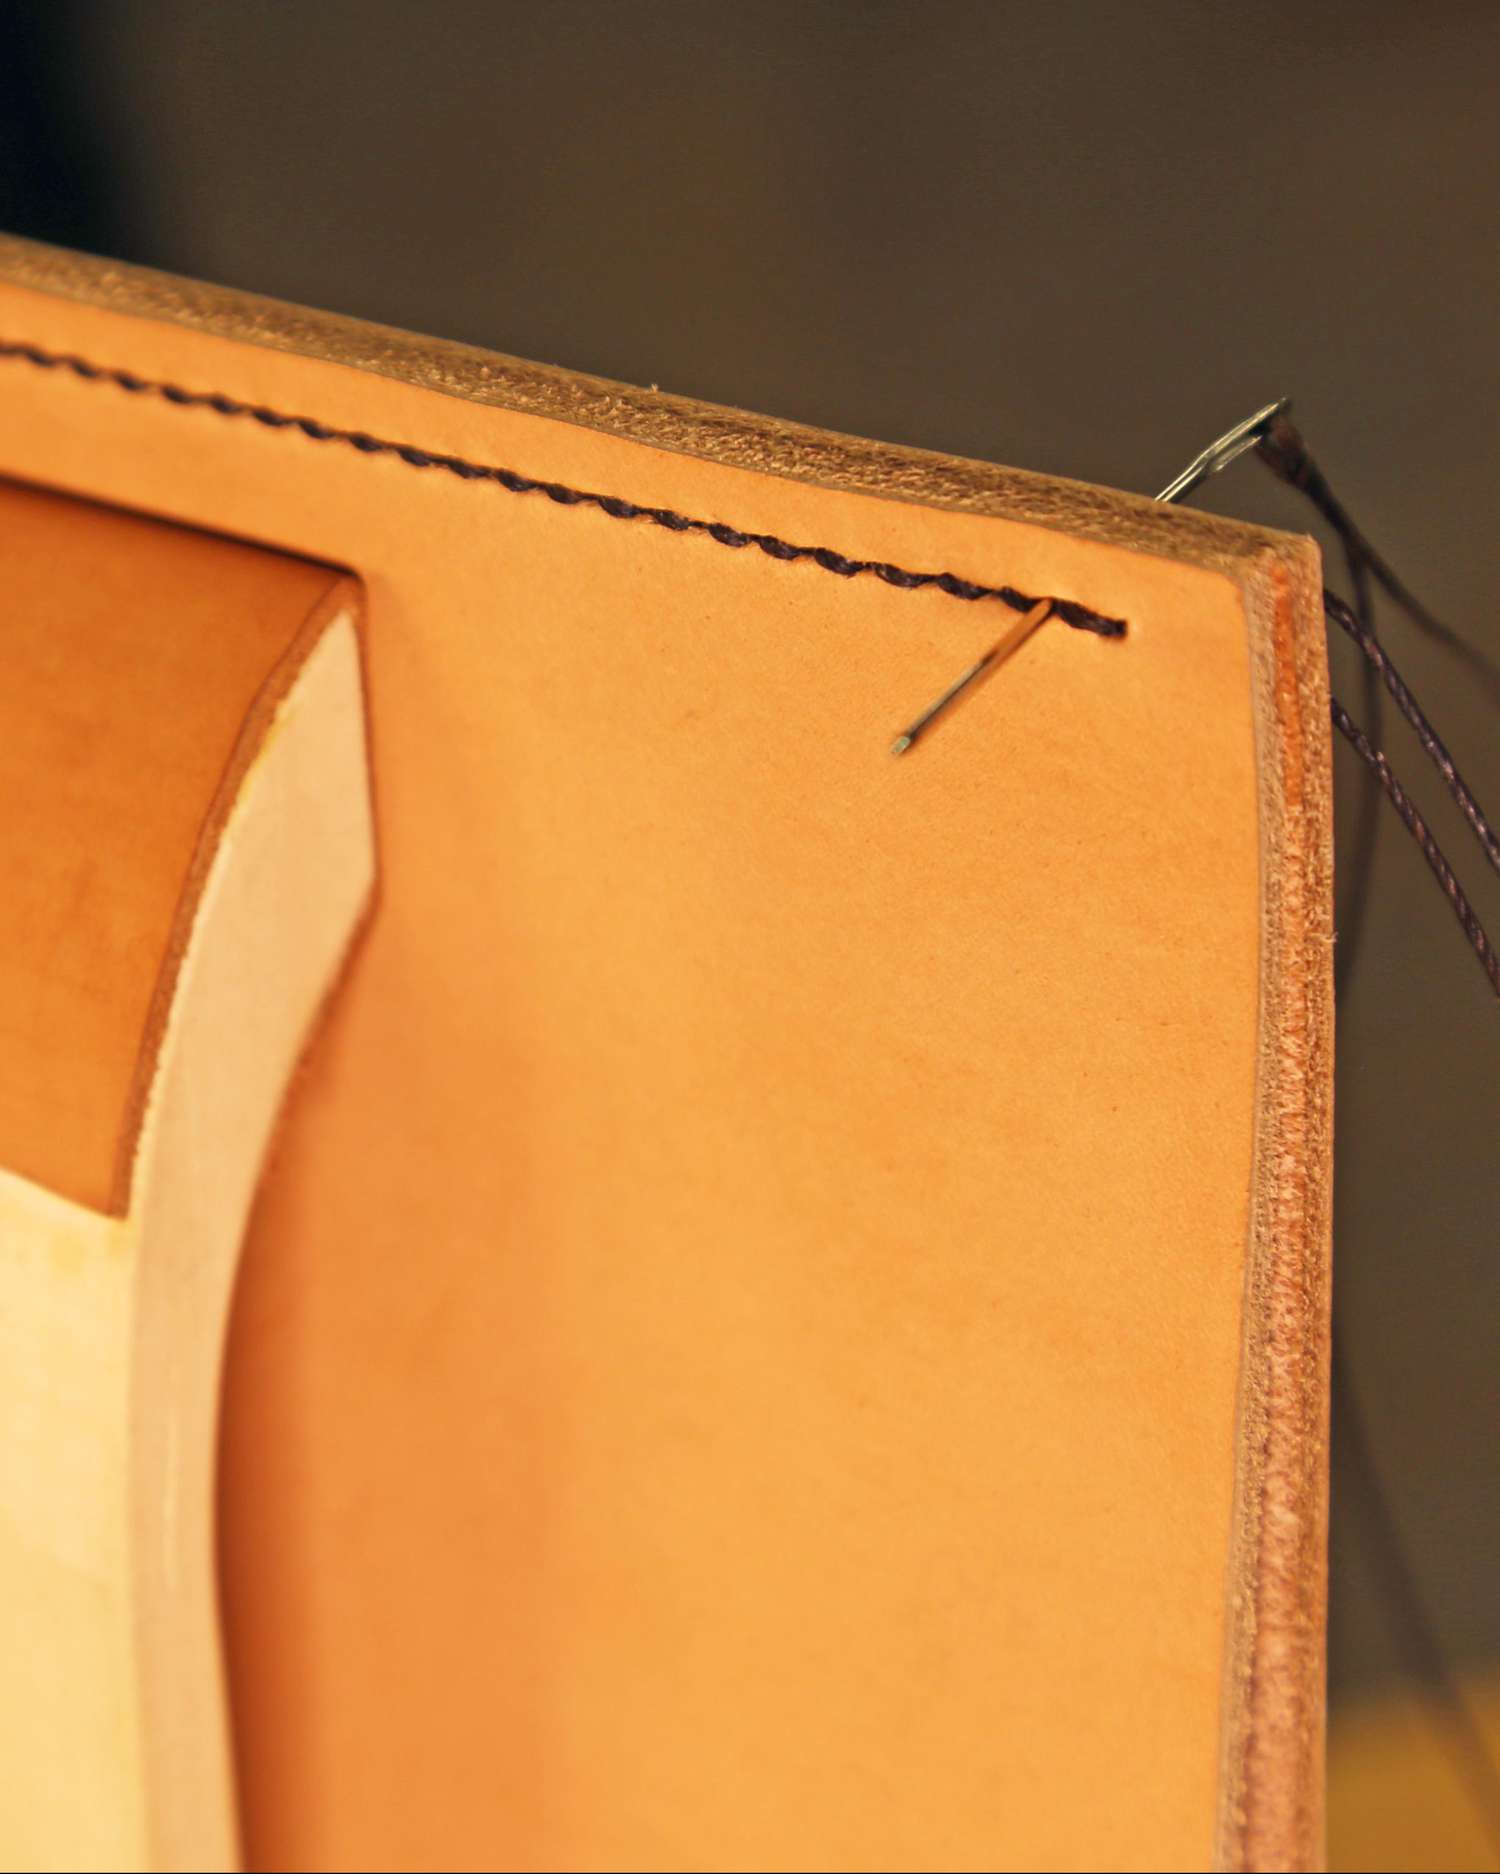 leather-sewing-finishing-0715